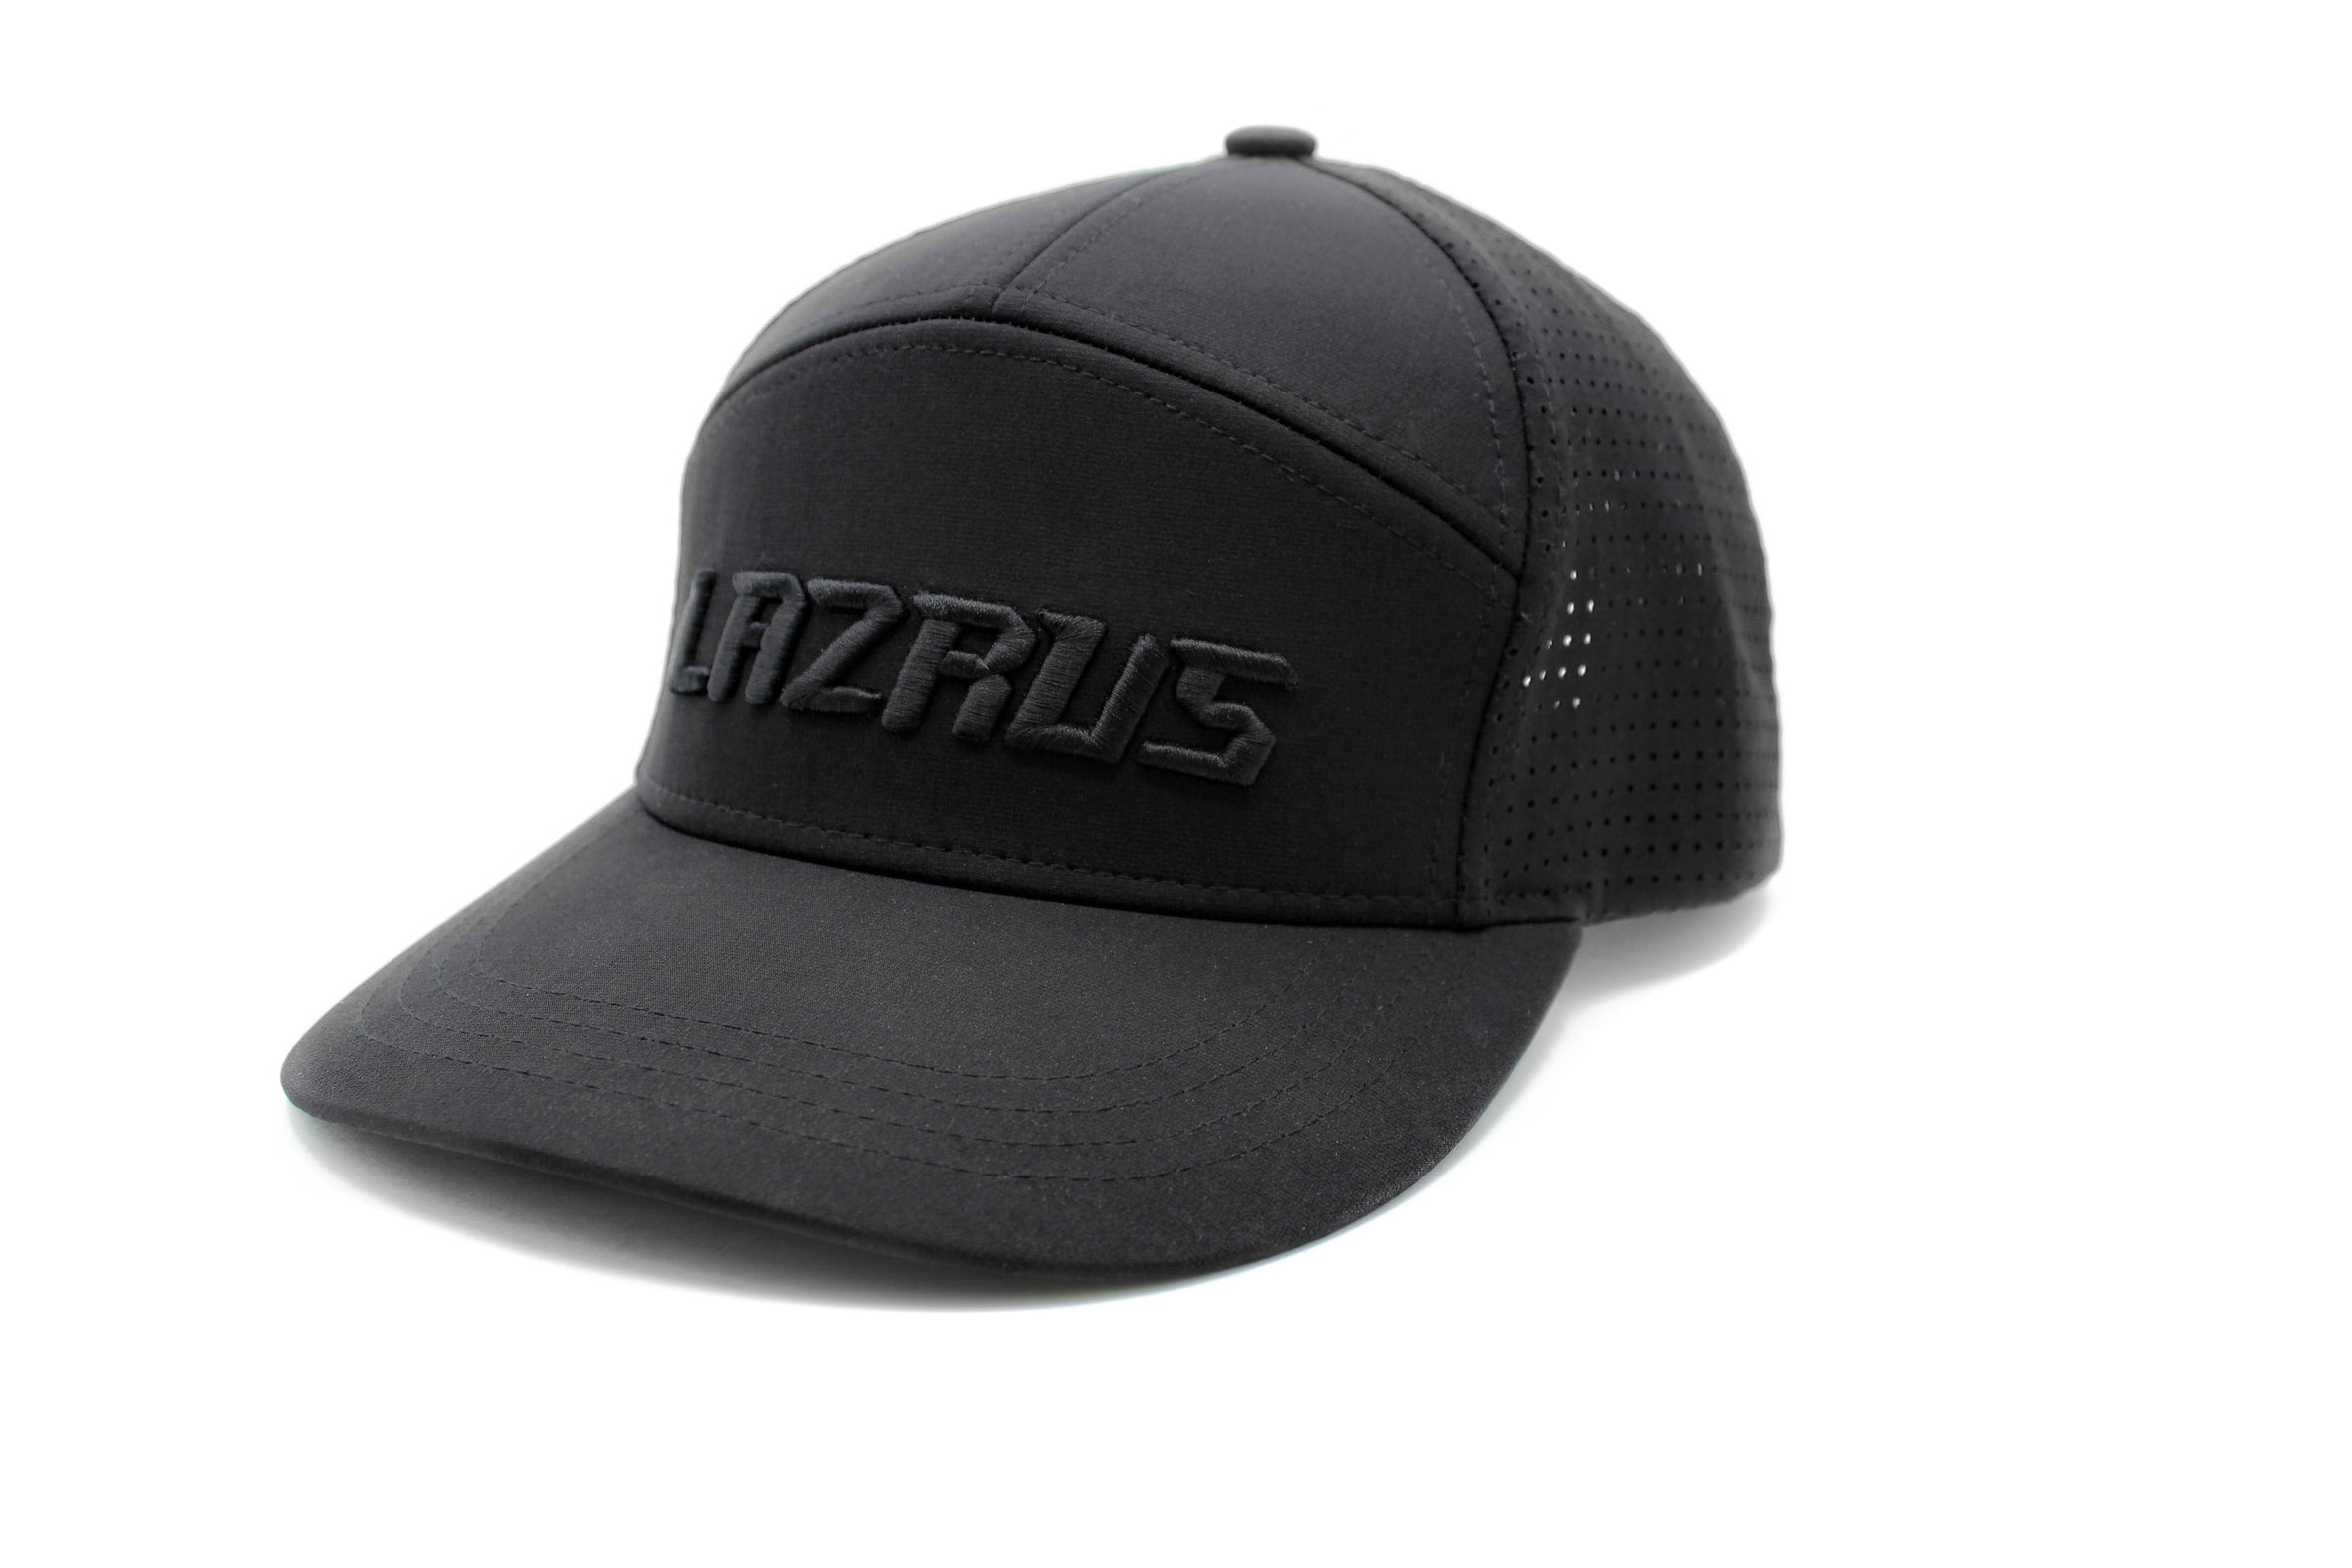 Lazrus Golf Snapback Hats — LAZRUS Golf